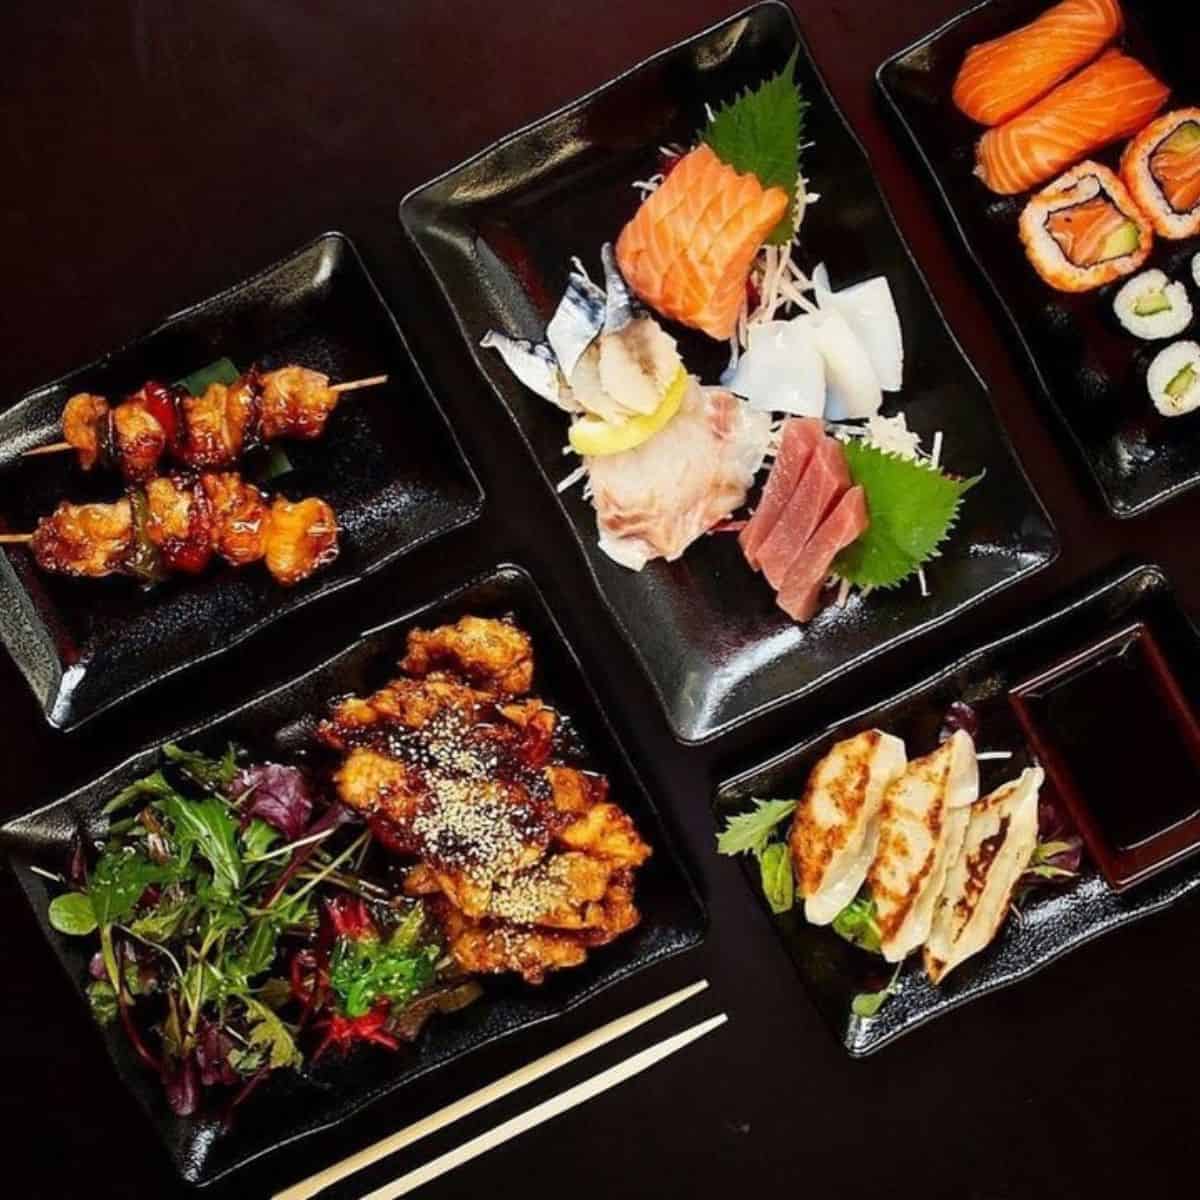 sushi and teriyaki platters on table Moshimo brighton restaurants best